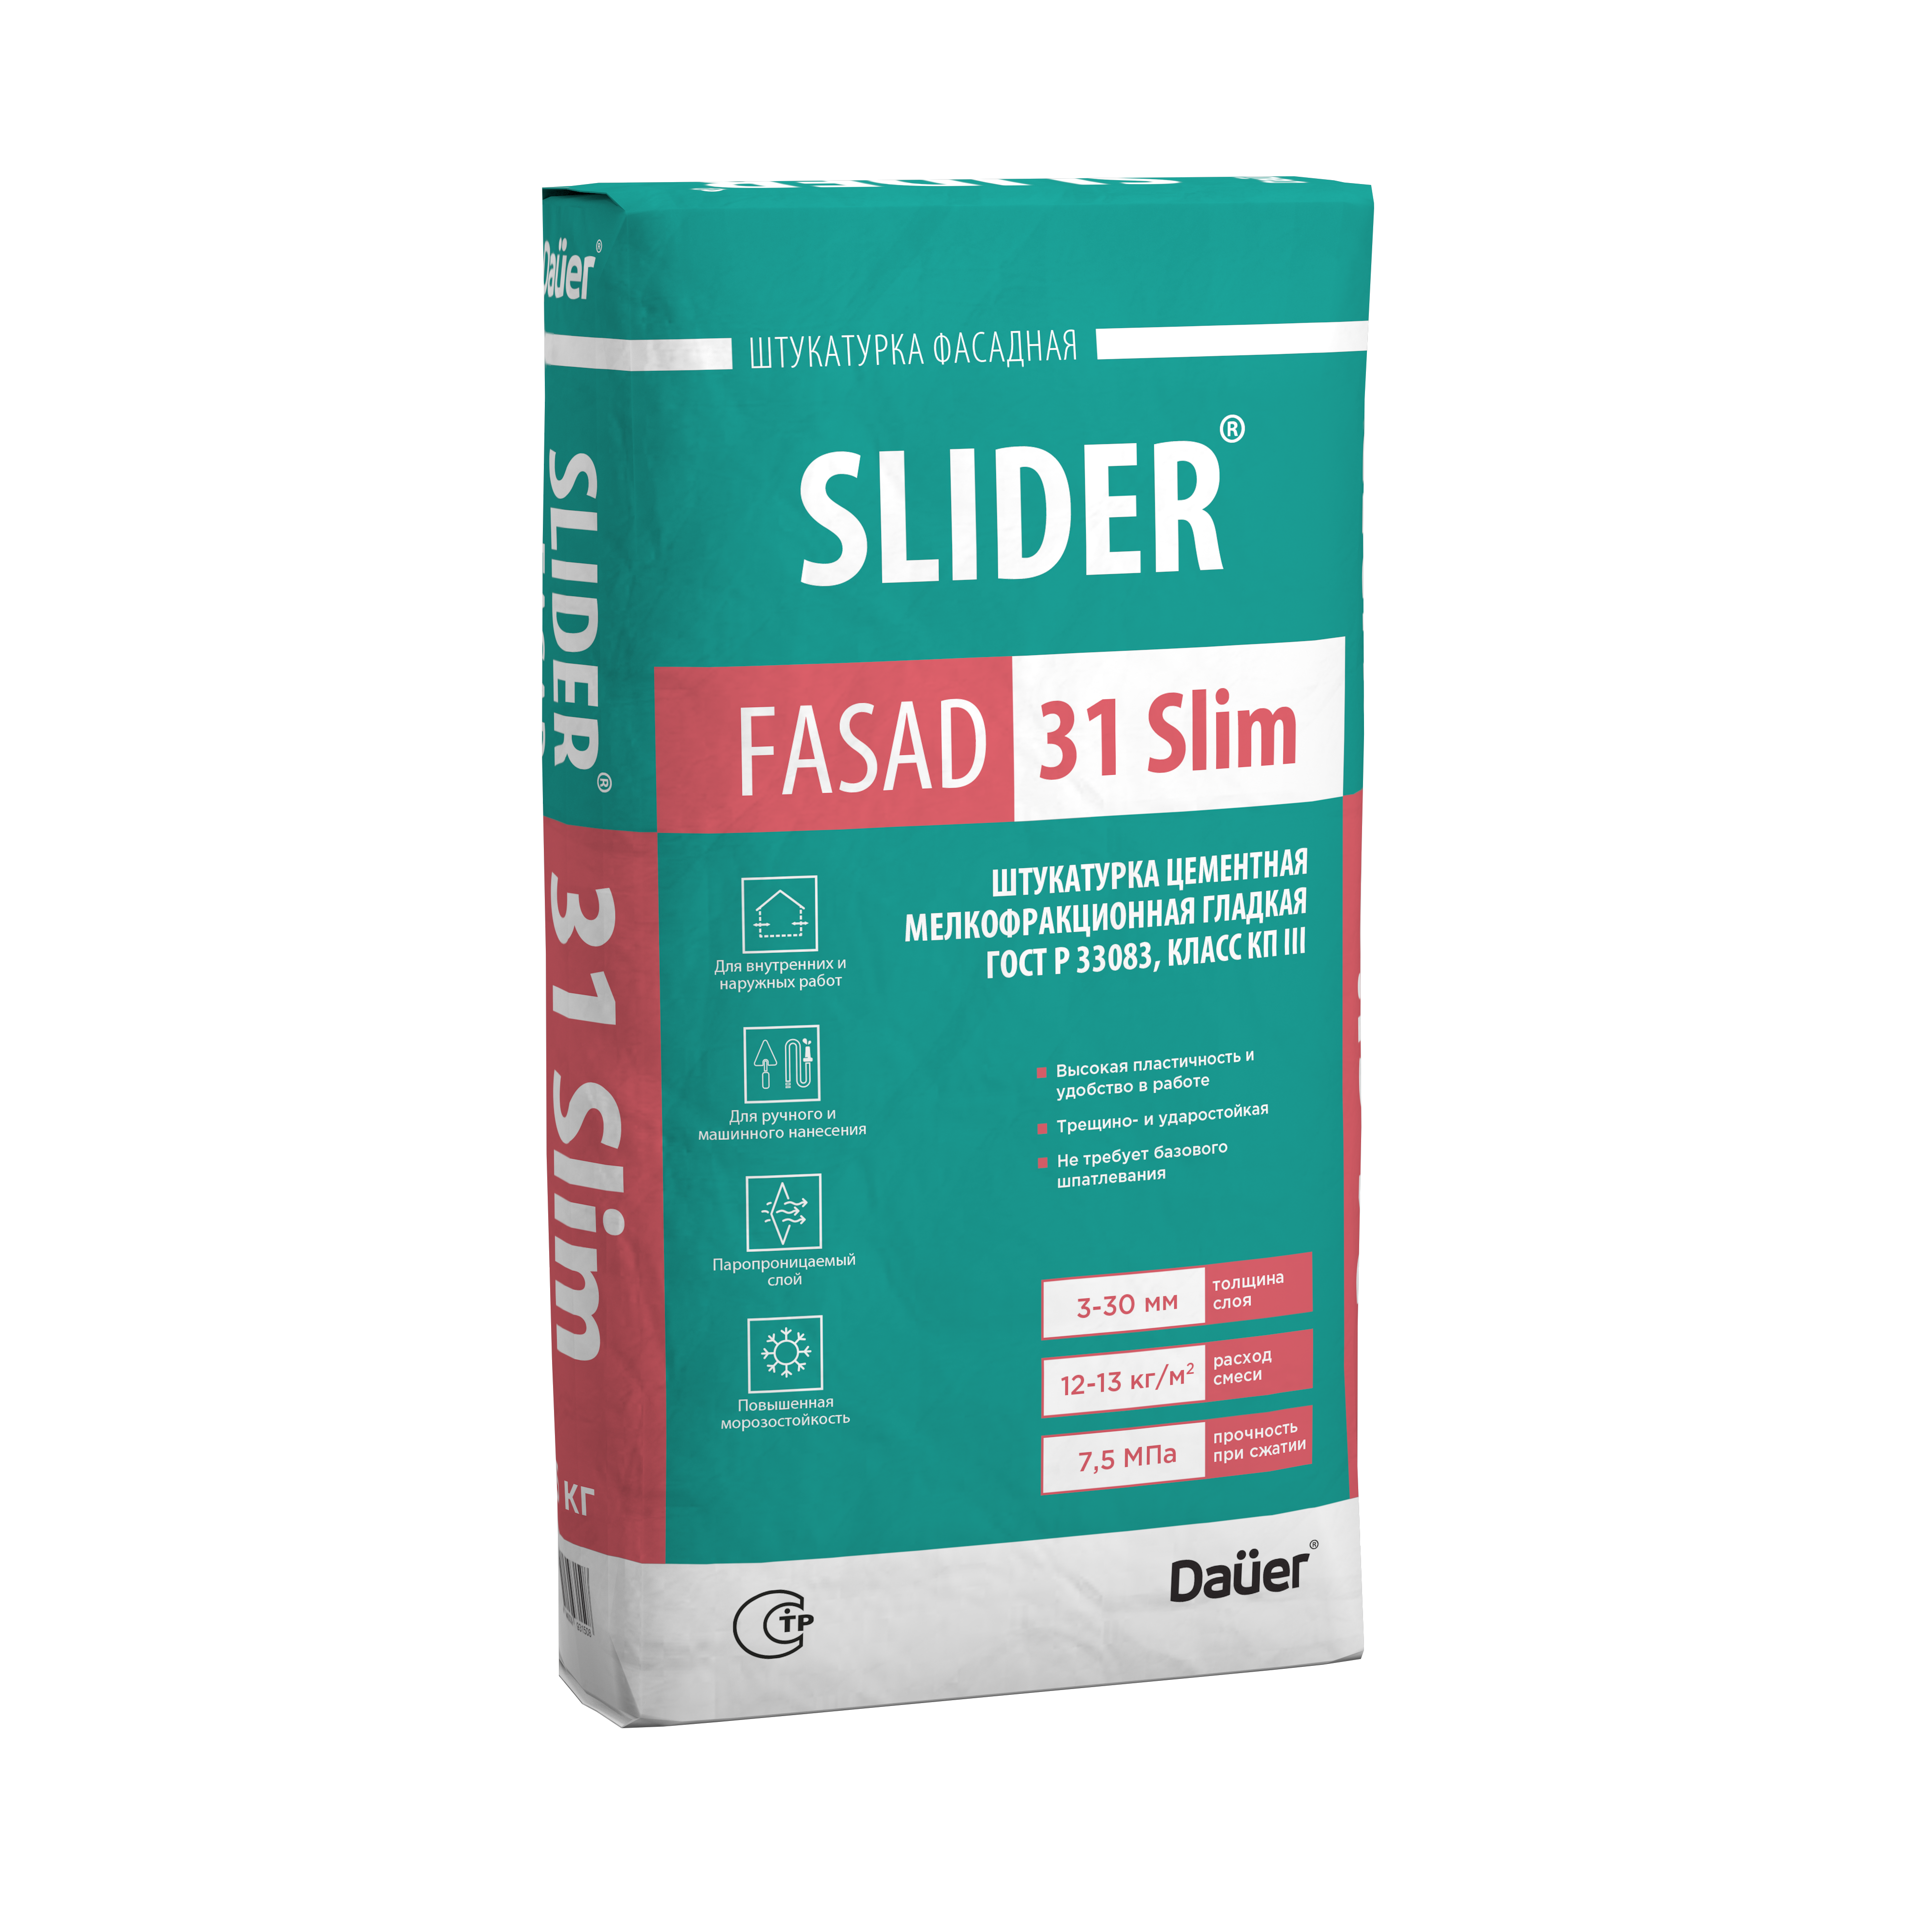 Штукатурка цементная мелкофракционная гладкая «SLIDER® FASAD 31 Slim» (25кг)